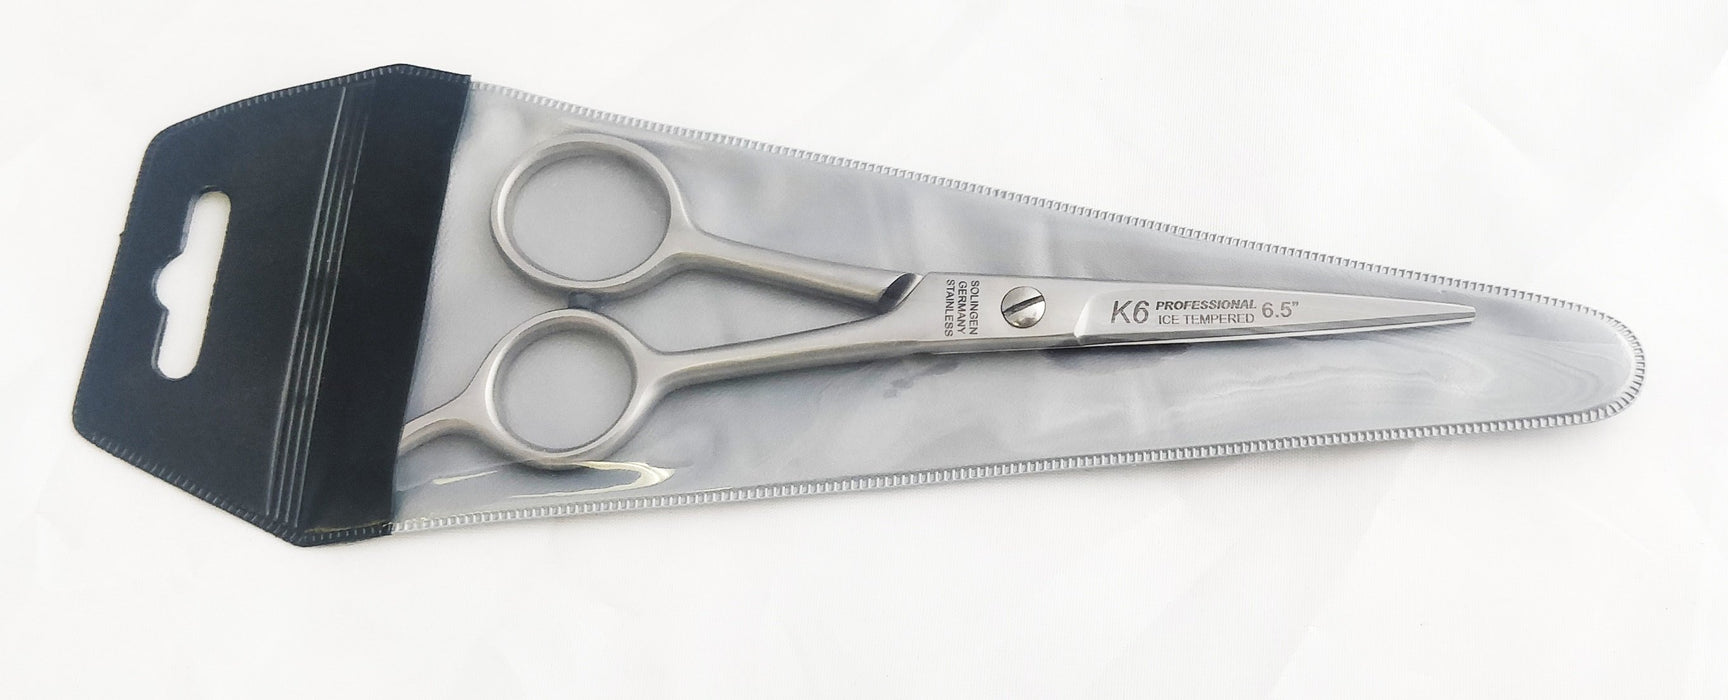 K-Series 6.5 in. German Made Barbershop & Salon Shear Stainless Steel Cutting Scissors